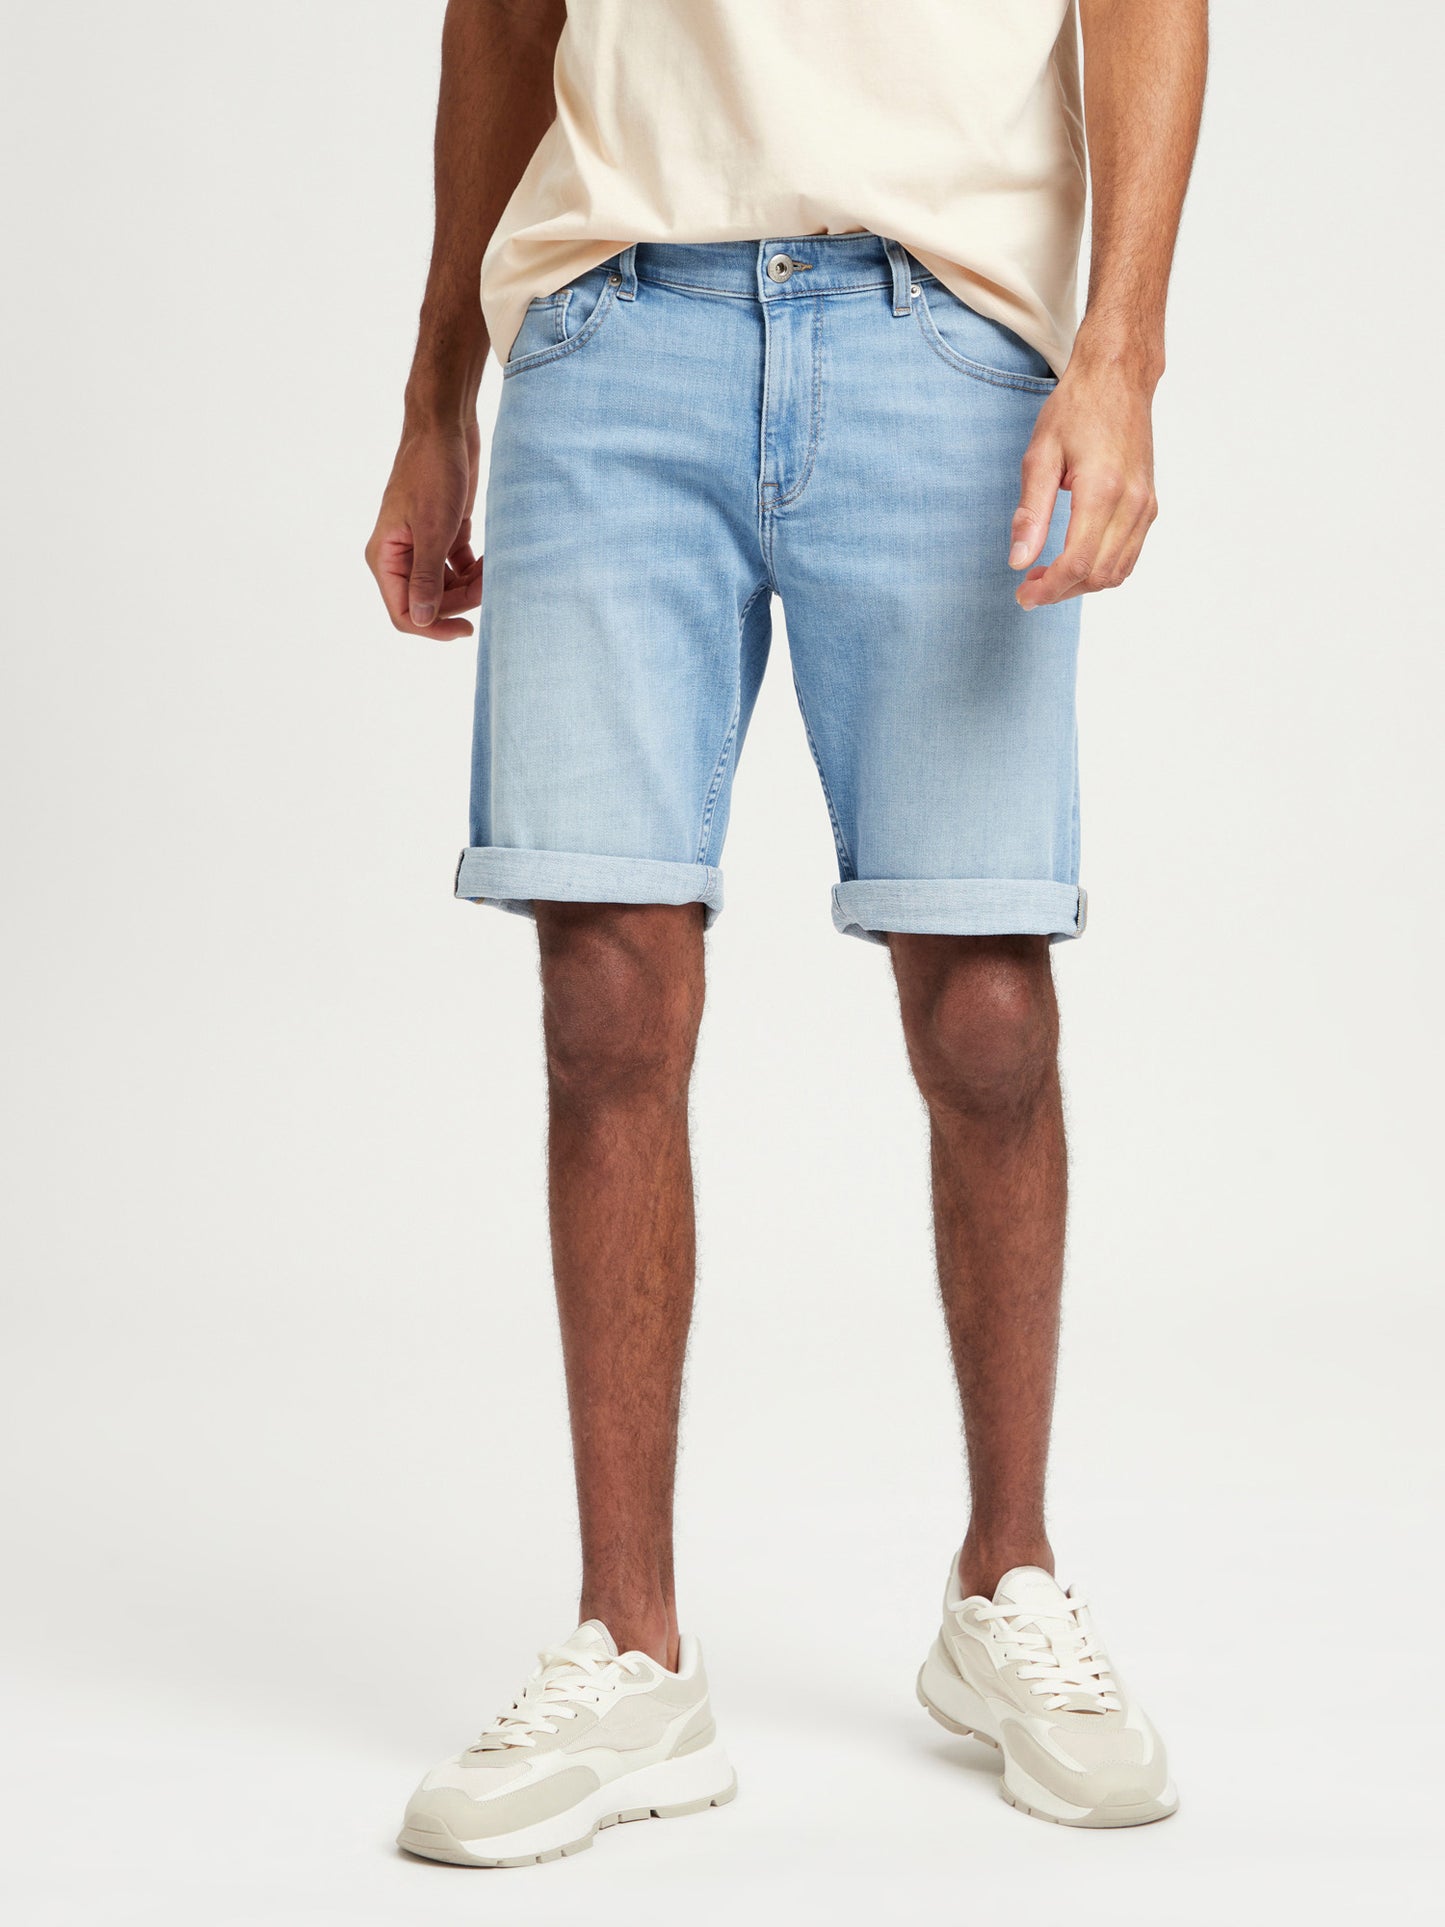 Leom men's denim shorts regular fit light blue